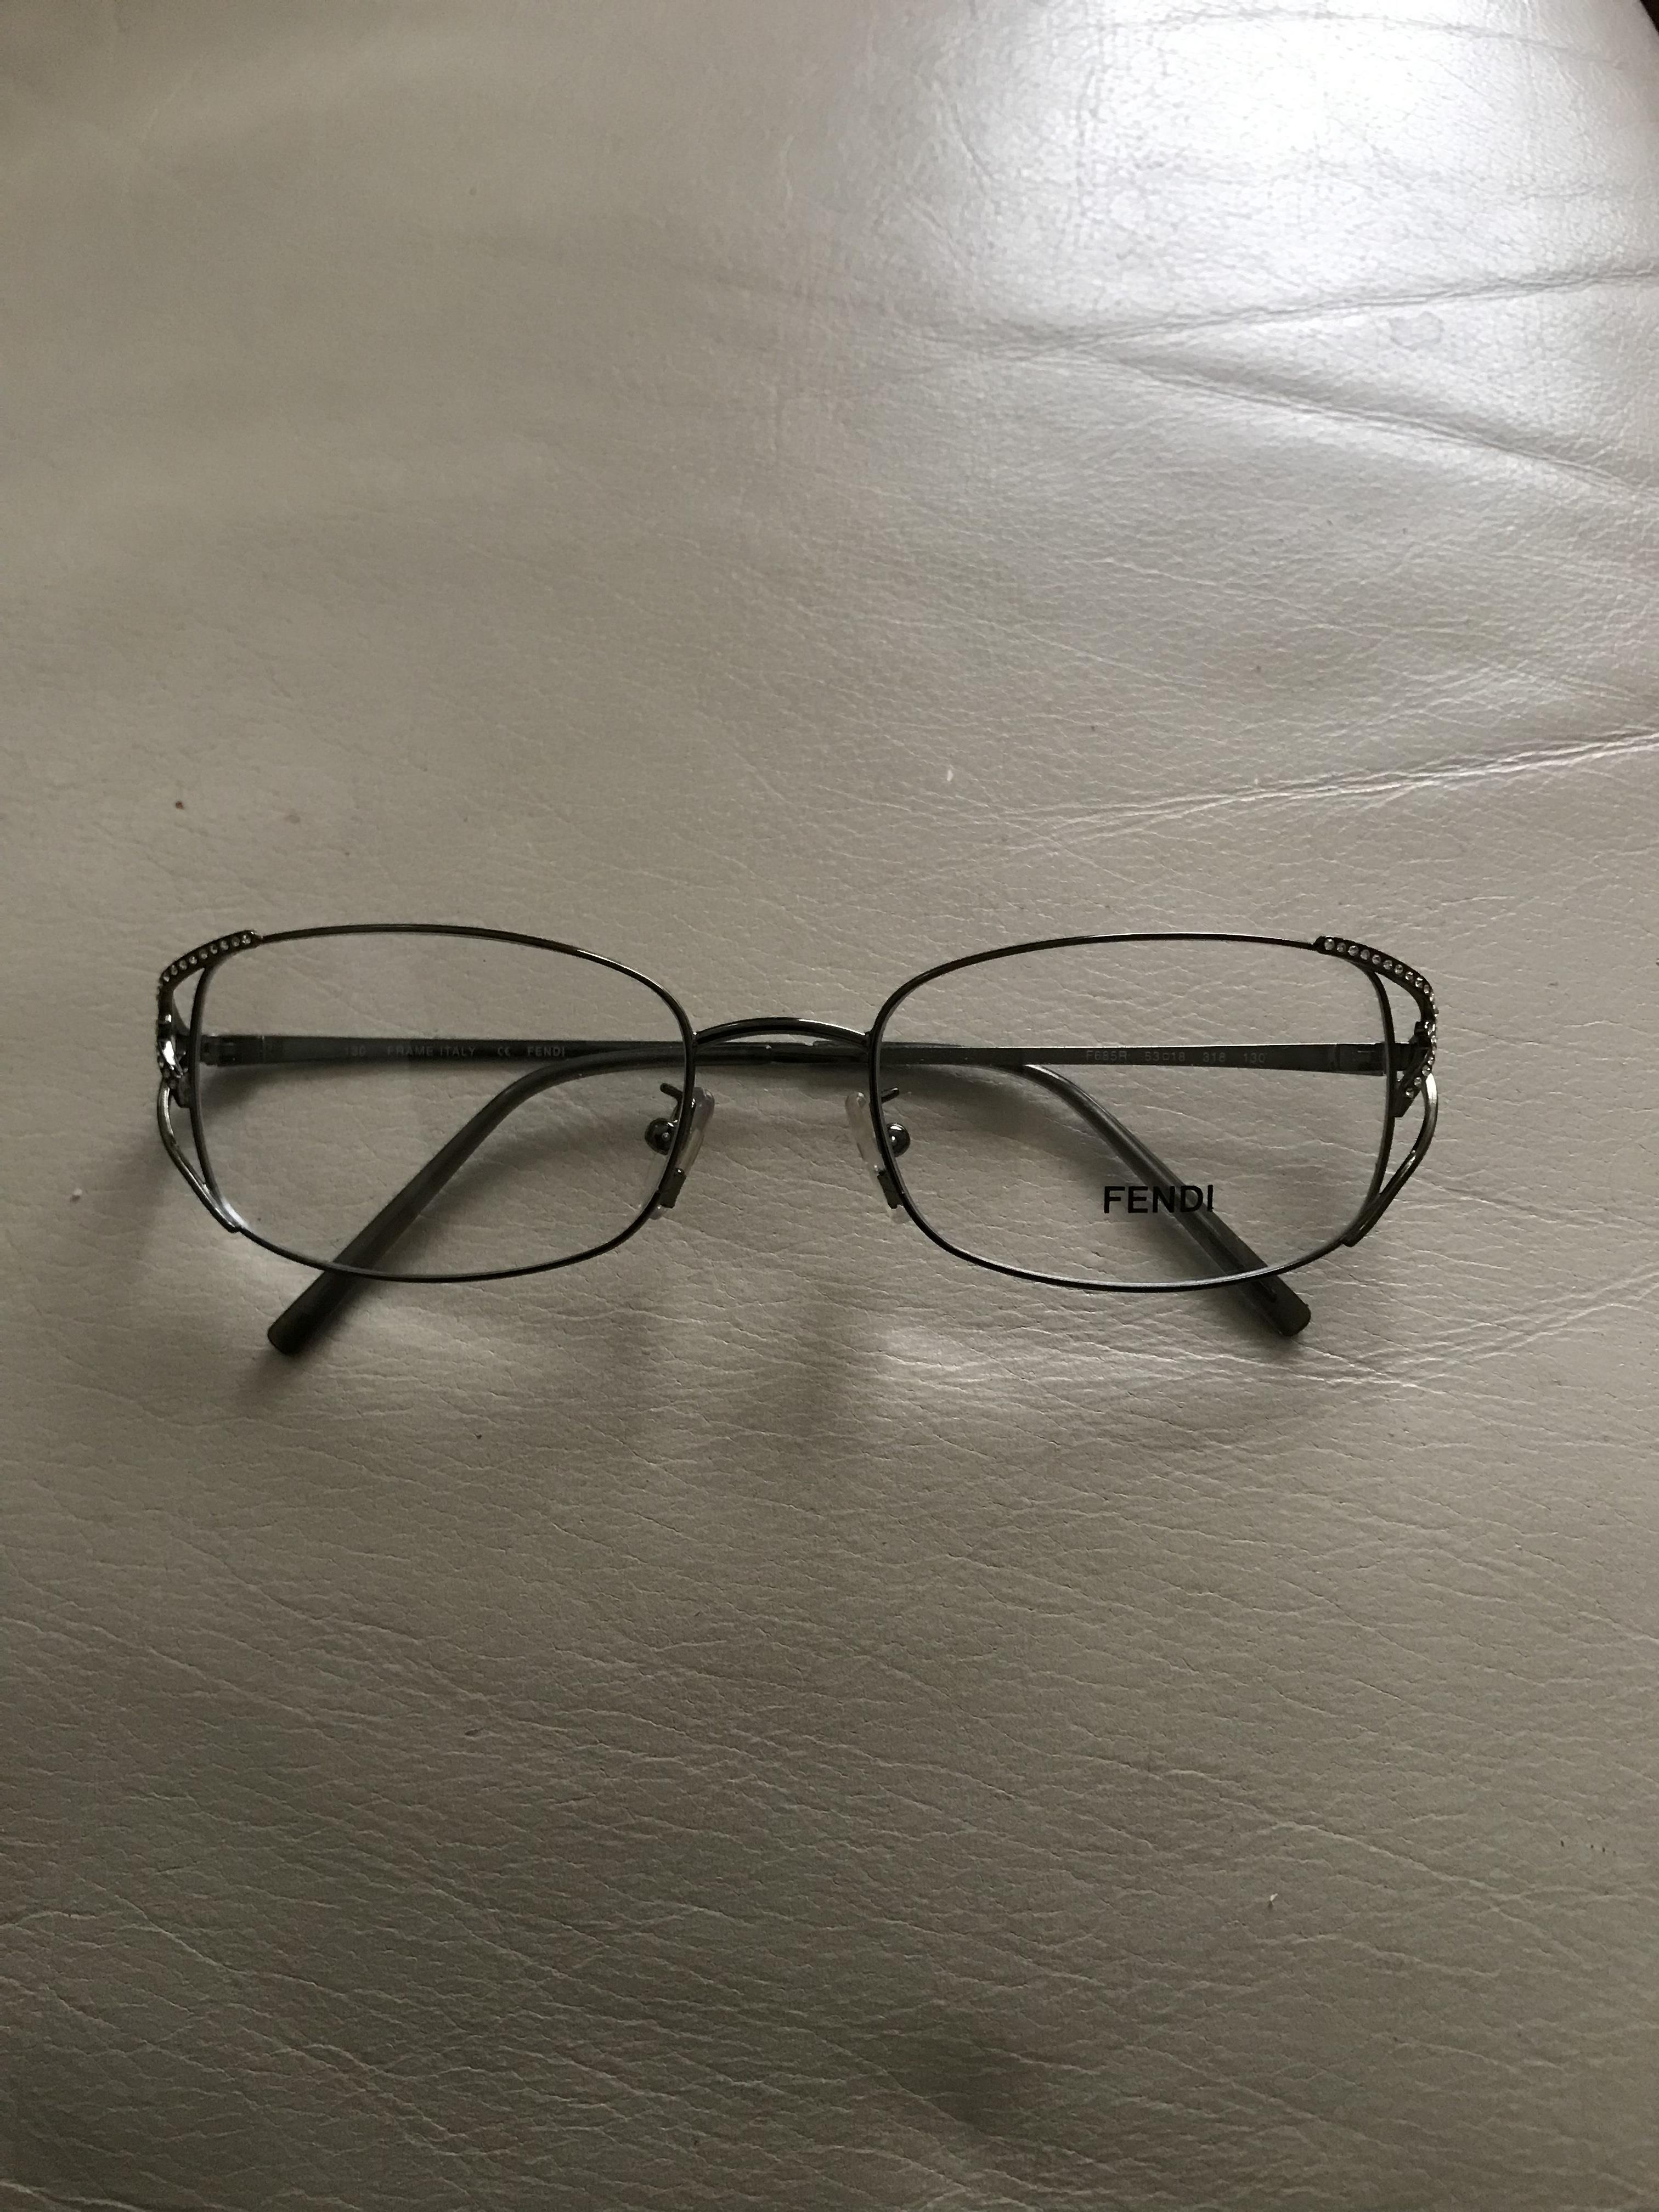 Fendi eyeglasses - Brand new - Image 9 of 9